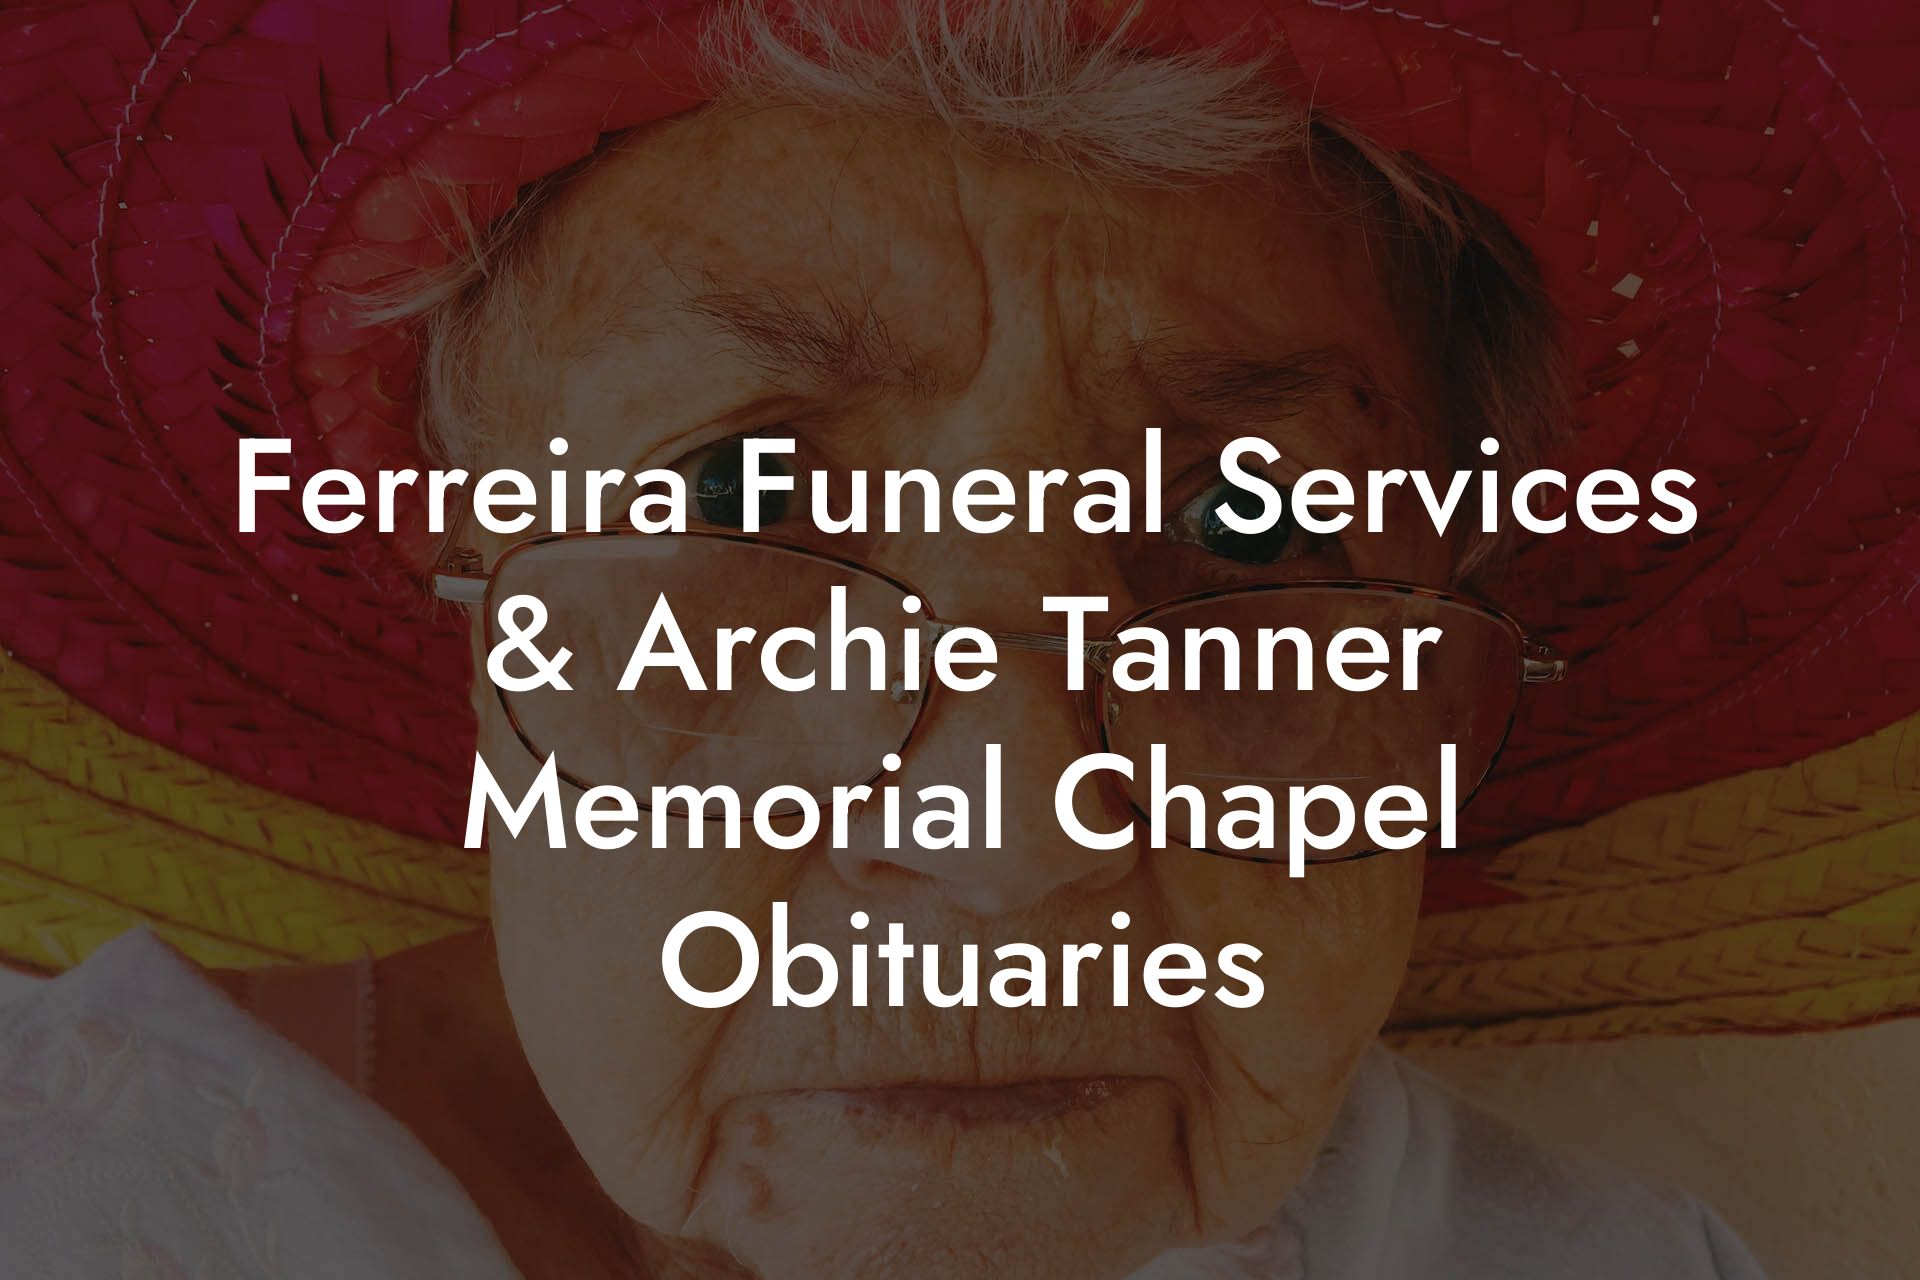 Ferreira Funeral Services & Archie Tanner Memorial Chapel Obituaries